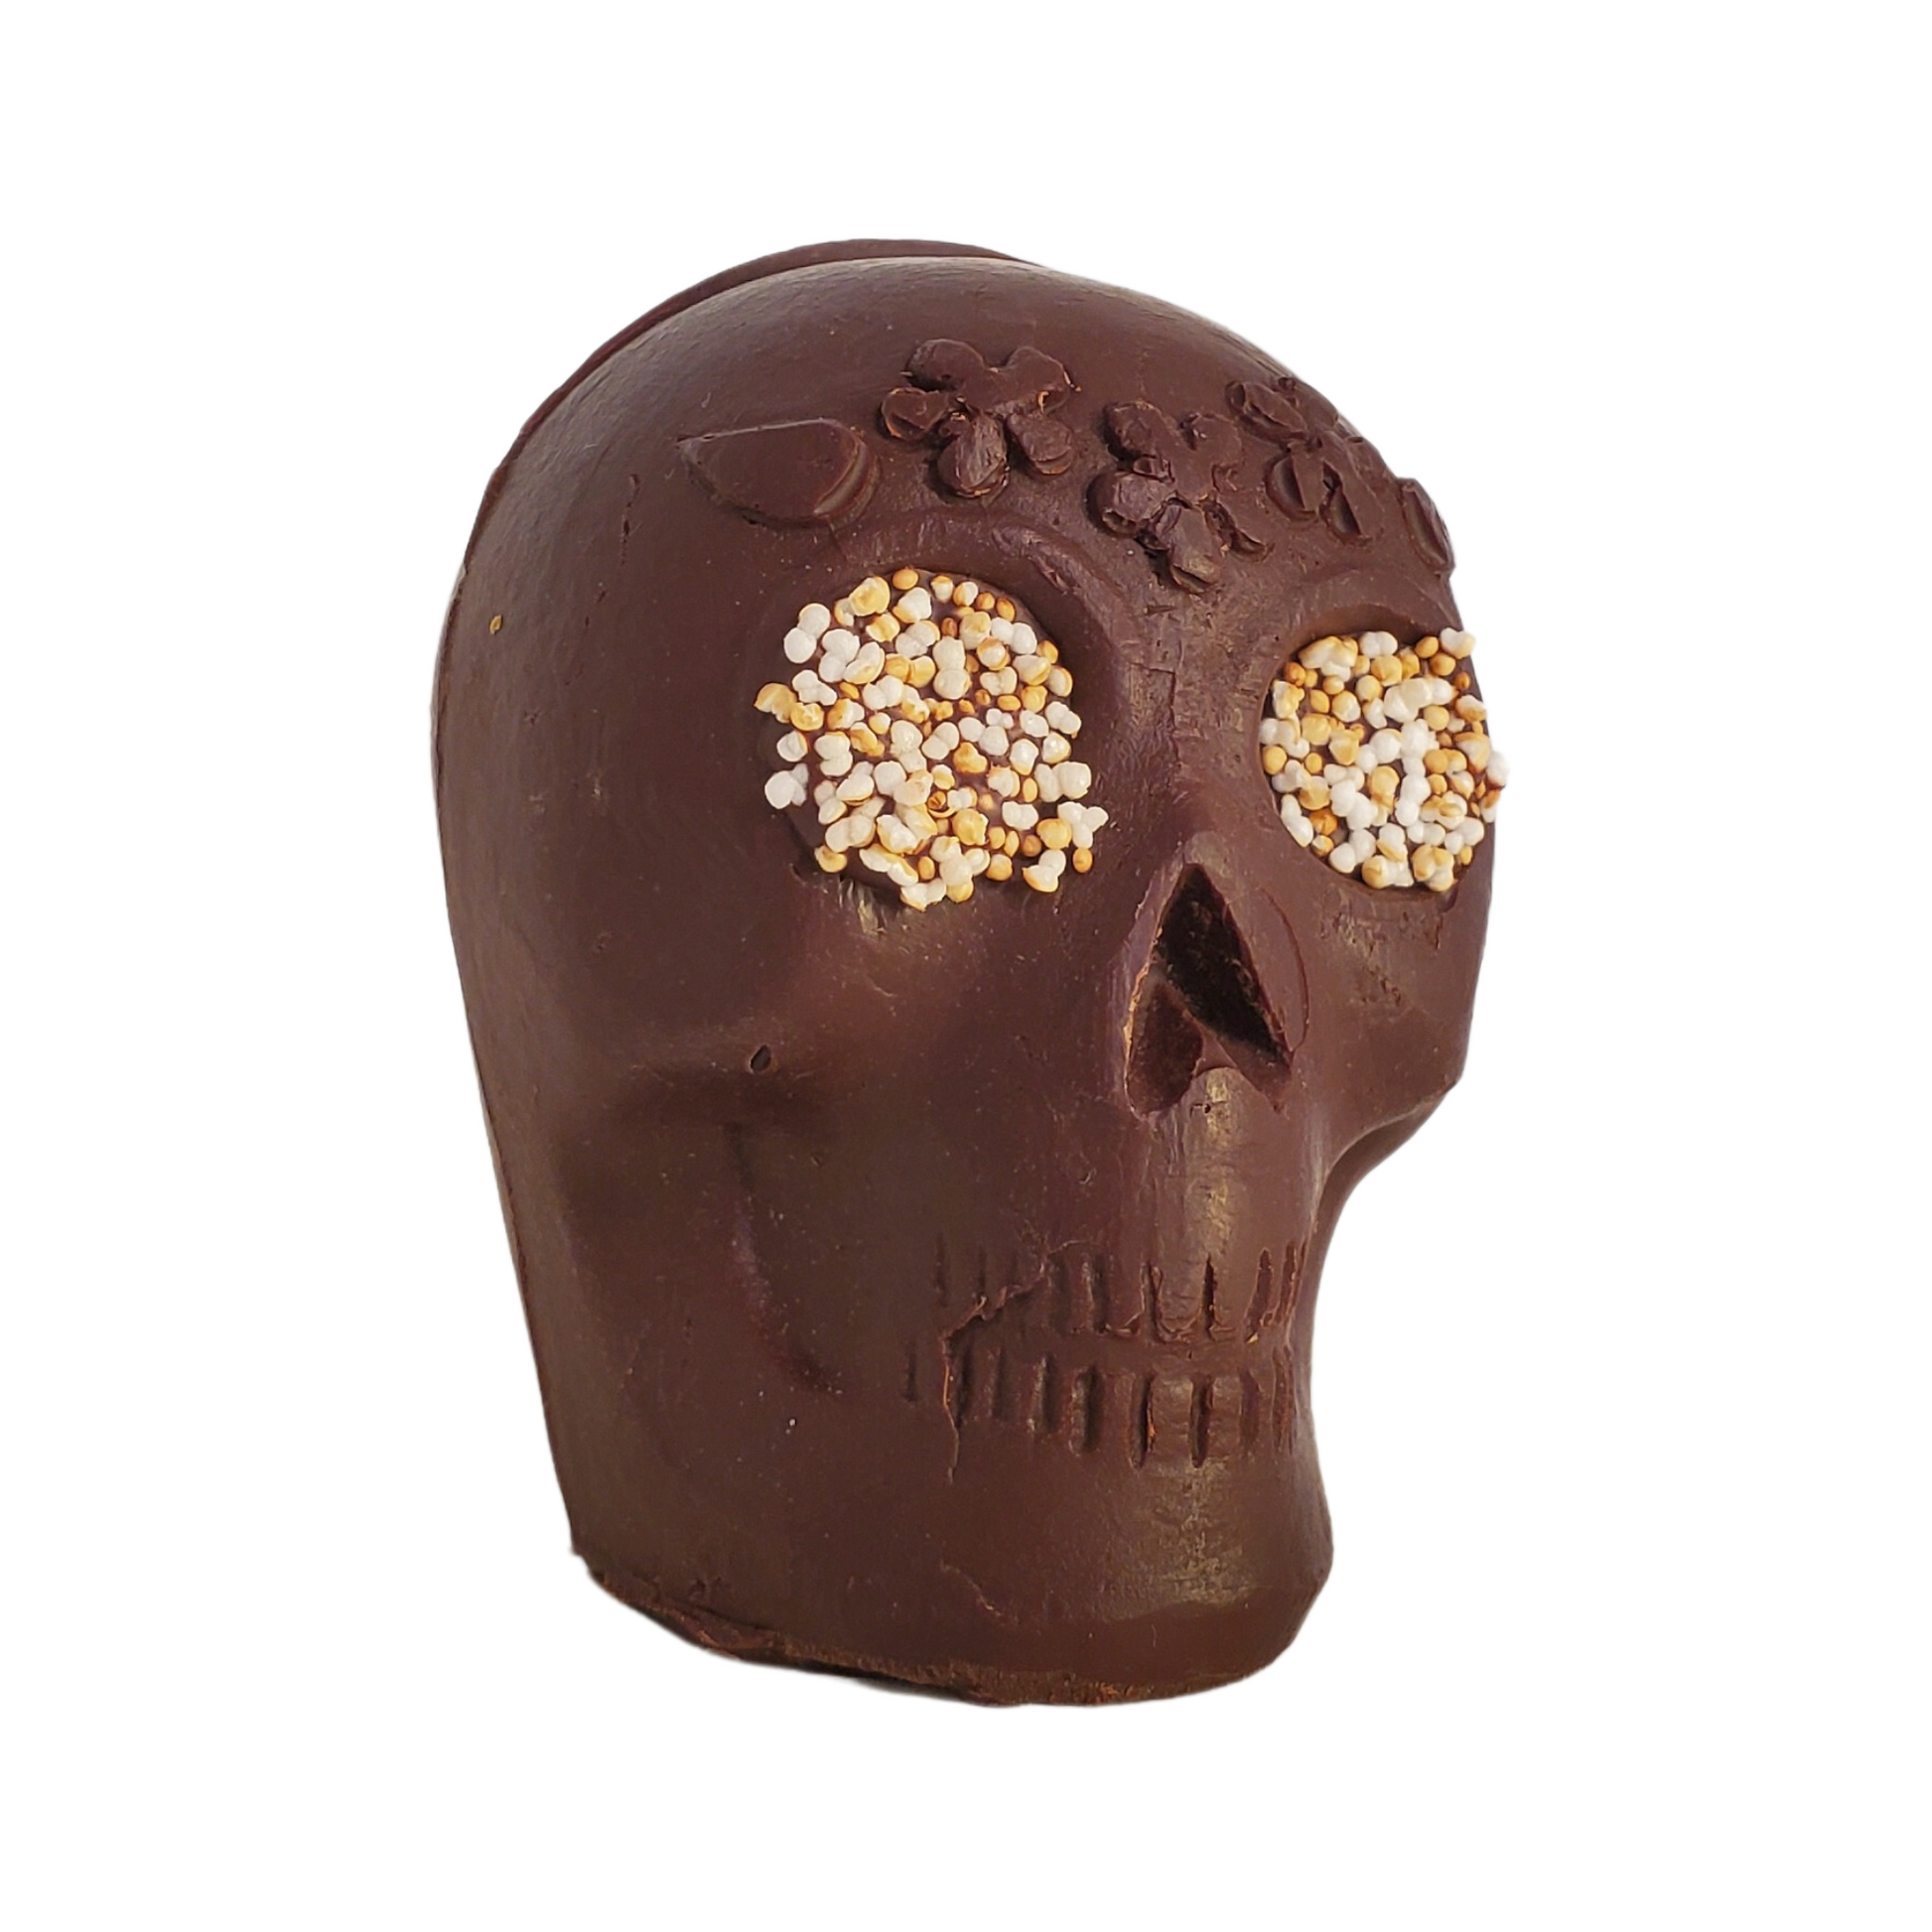 Chocolate skull figurine with white popped amaranth eyes and a flower headband decoration.